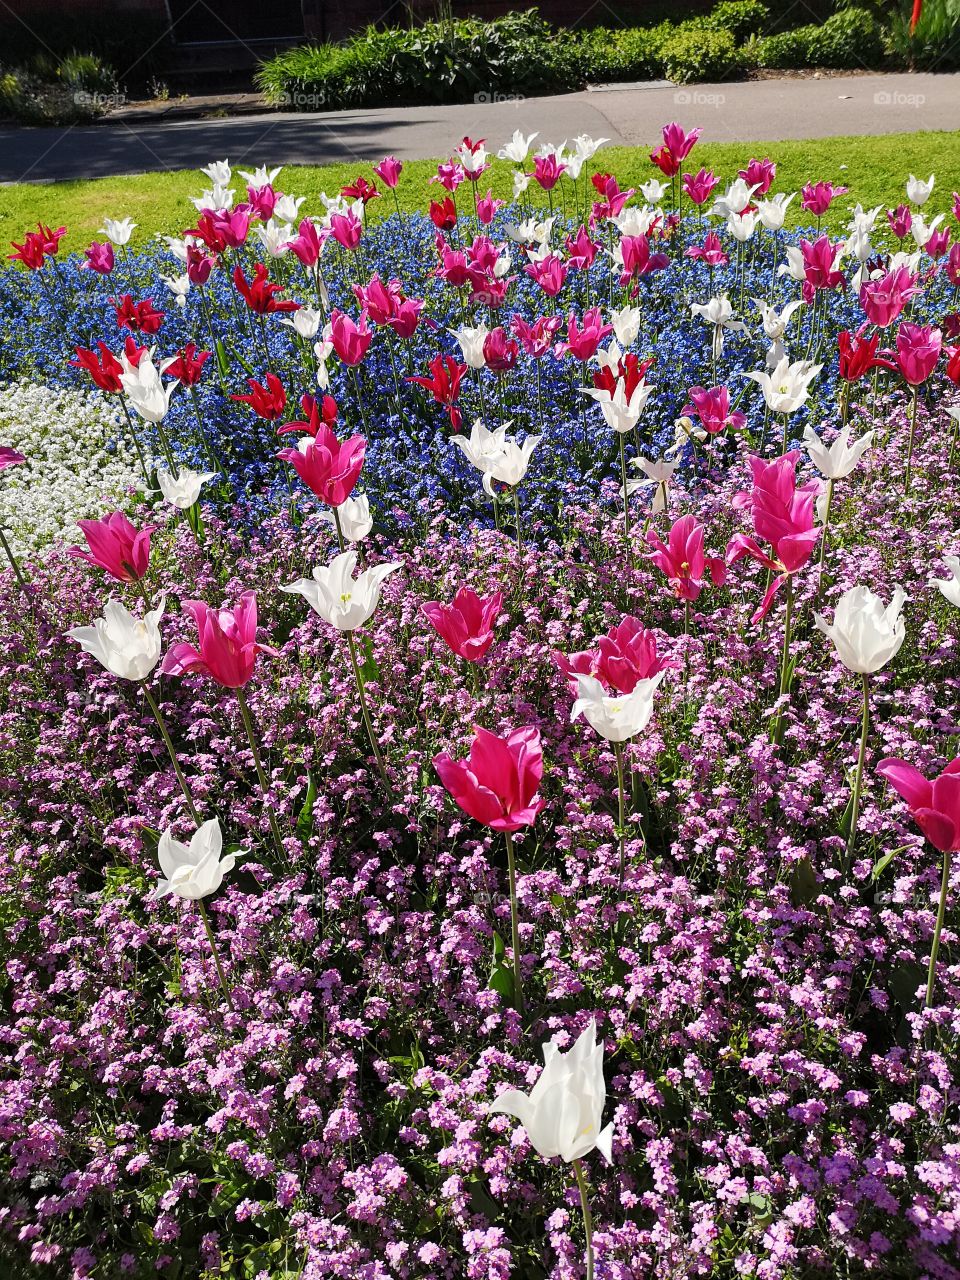 Flower bed Queens Park Loughborough England.